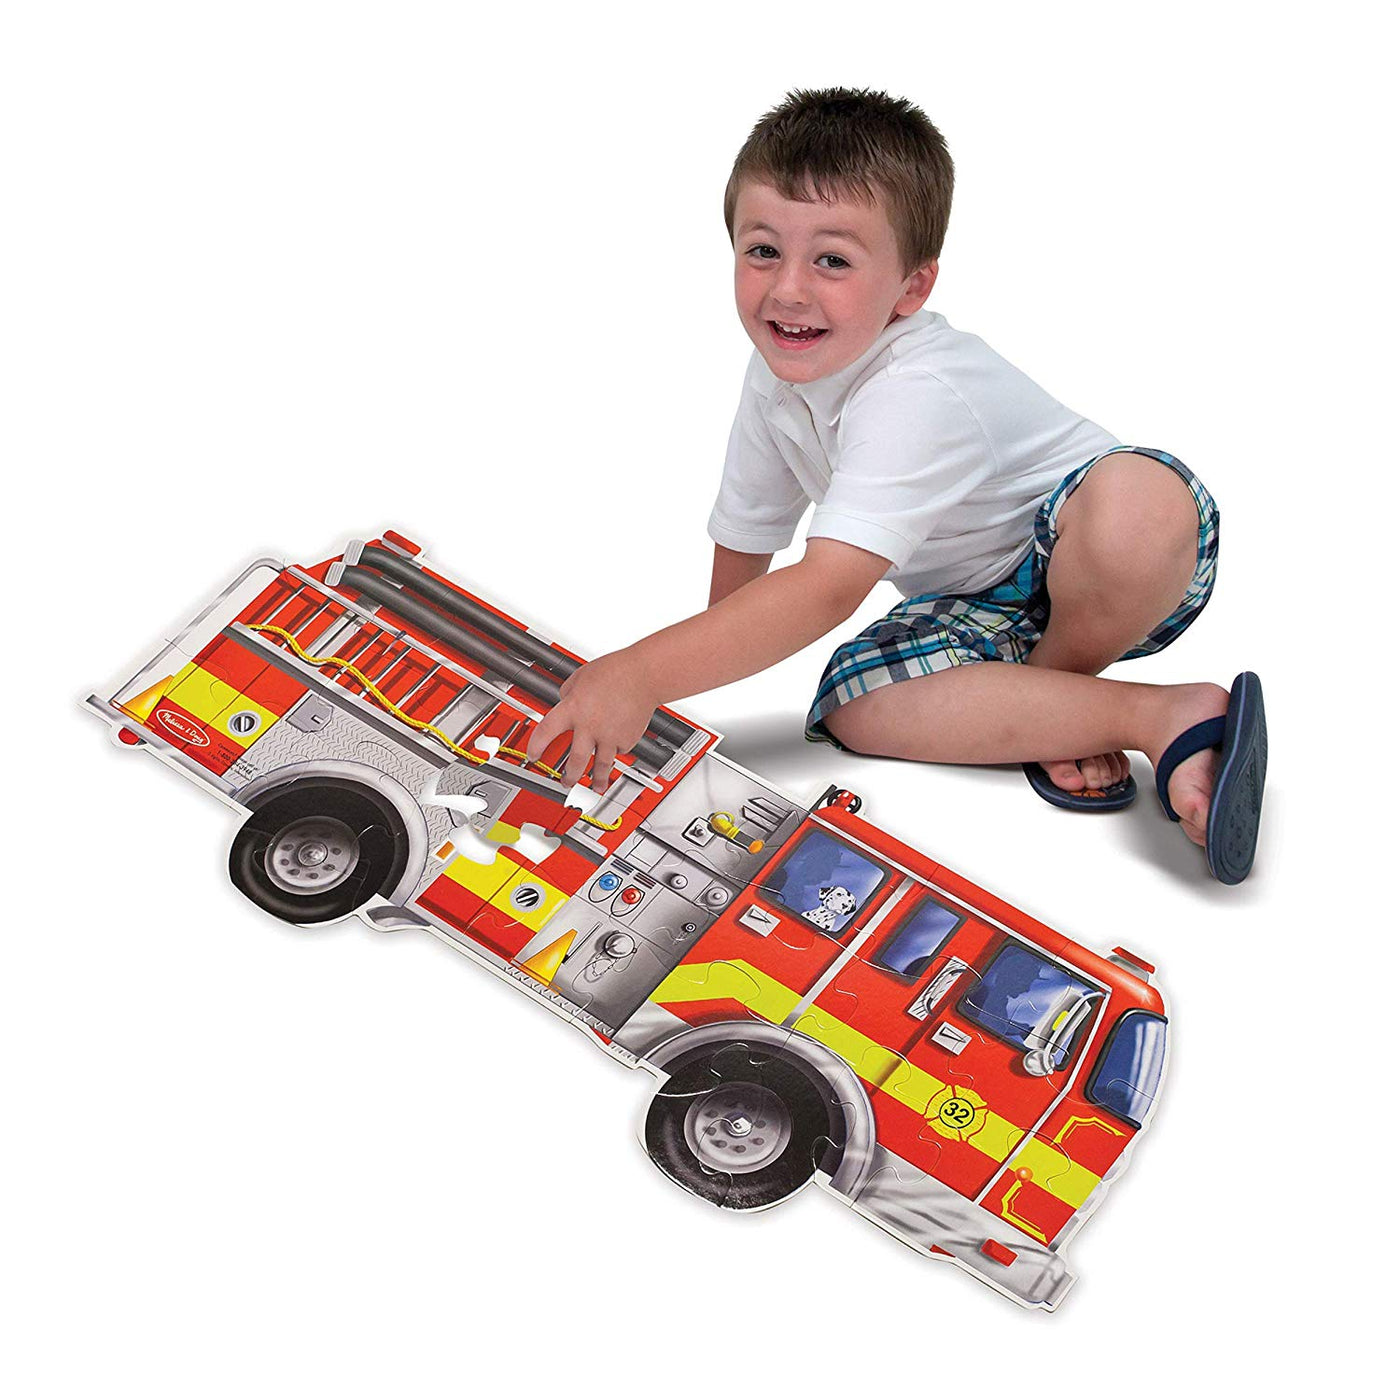 Giant fire truck/Puzzle dyshemeje 'Zjarrfiksi gjigant'-Melissa&Doug